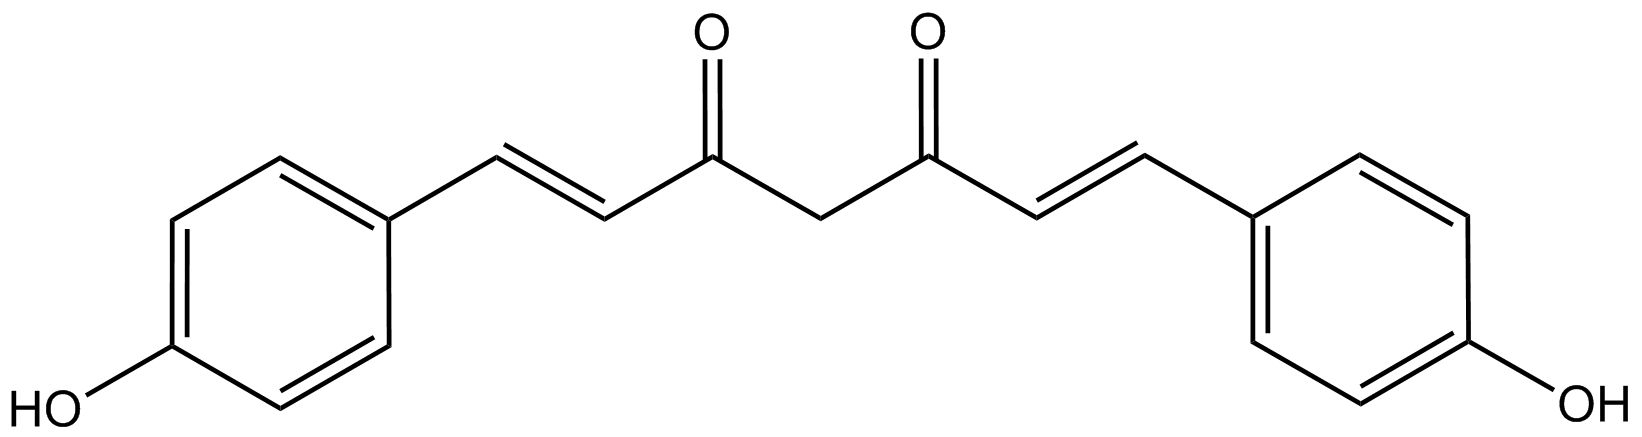 Bisdemethoxycurcumin phyproof® Reference Substance | PhytoLab